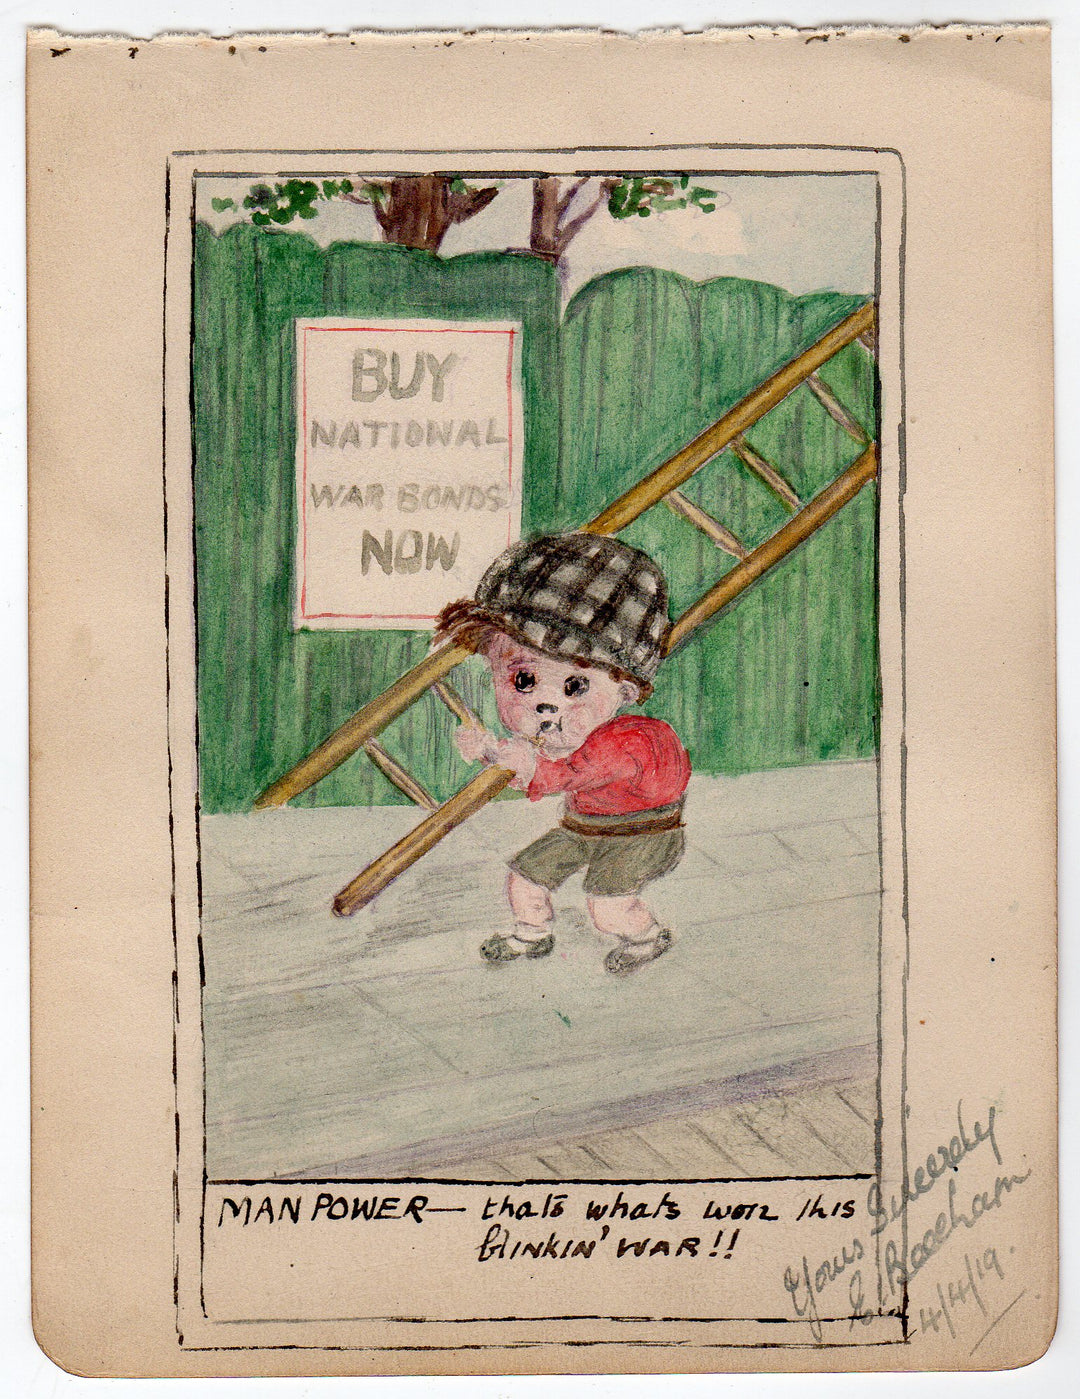 WWI War Bonds Poster Humor Original Antique Pencil and Ink Sketch Drawing 1919